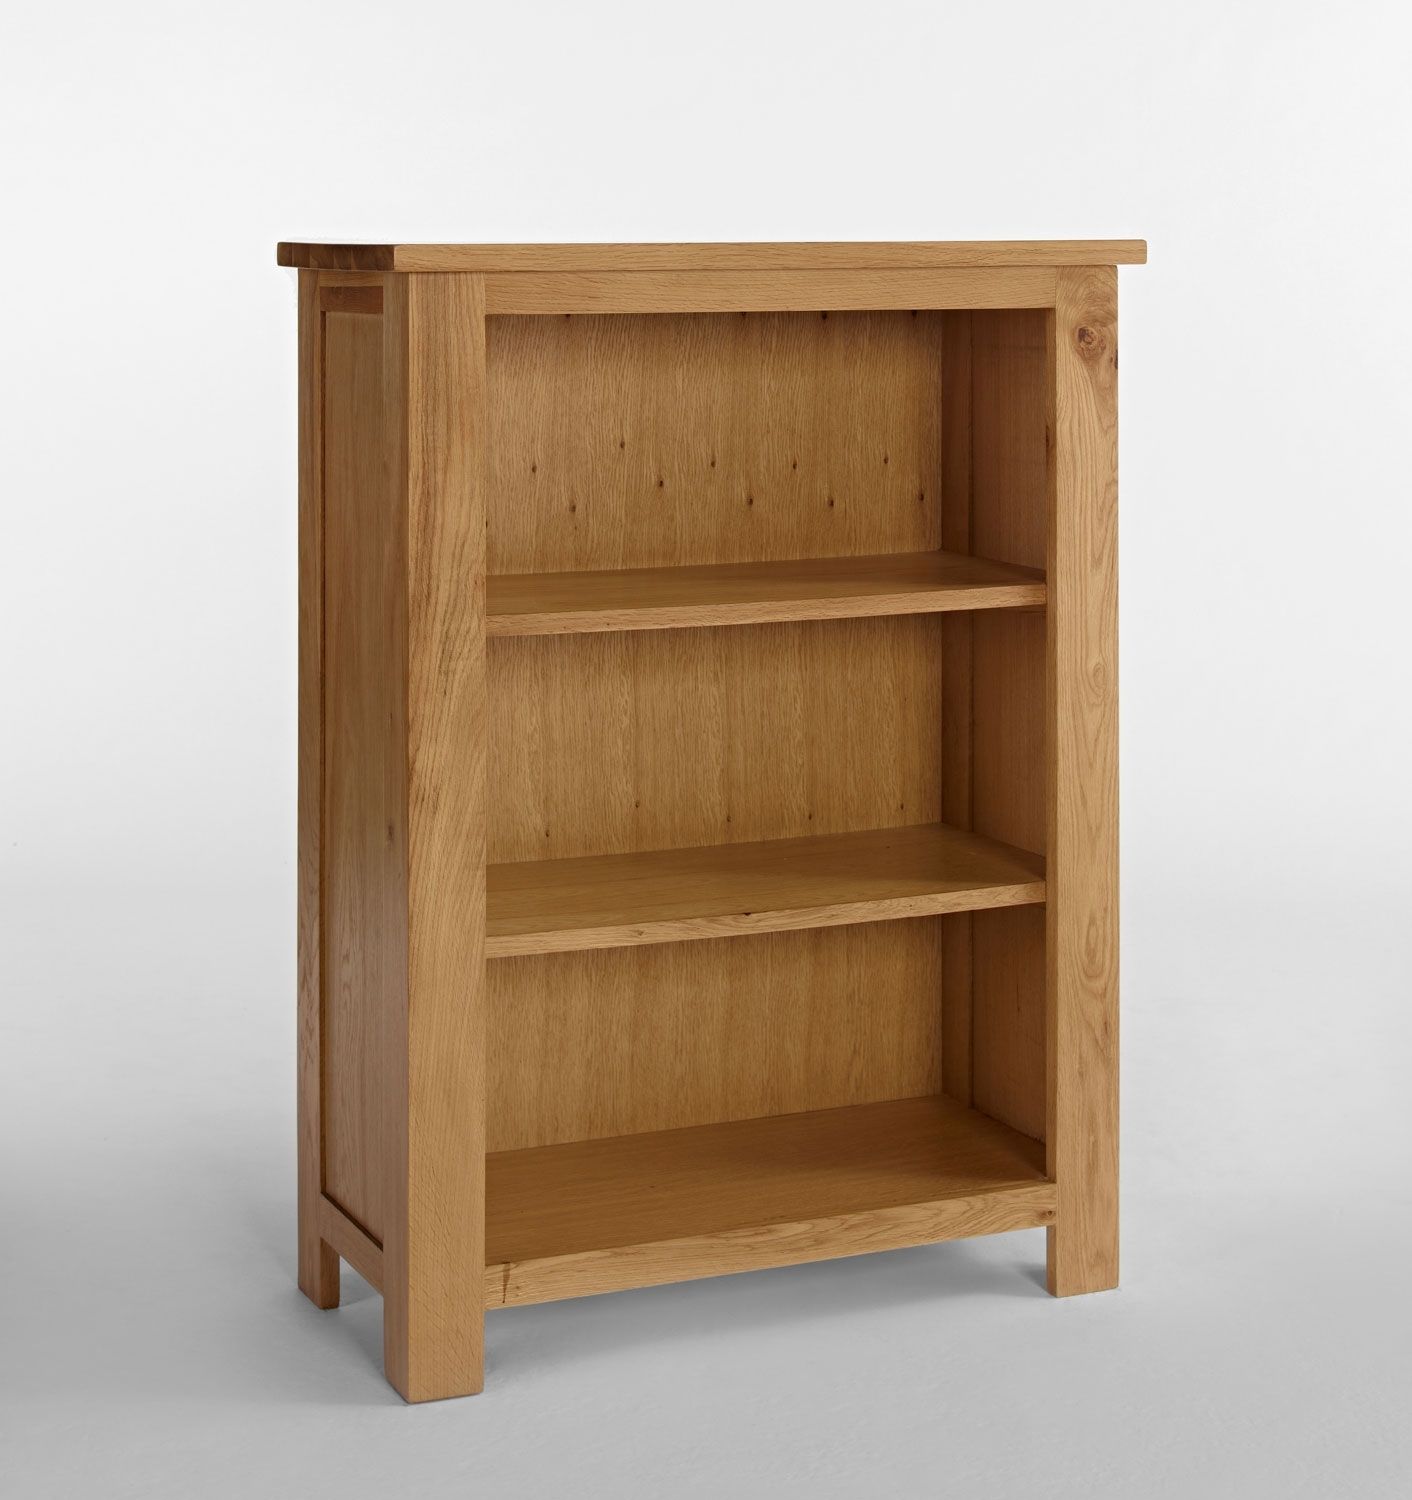 Contemporary Oak Bookcase Ecormin With Regard To Contemporary Oak Shelving Units (View 10 of 15)